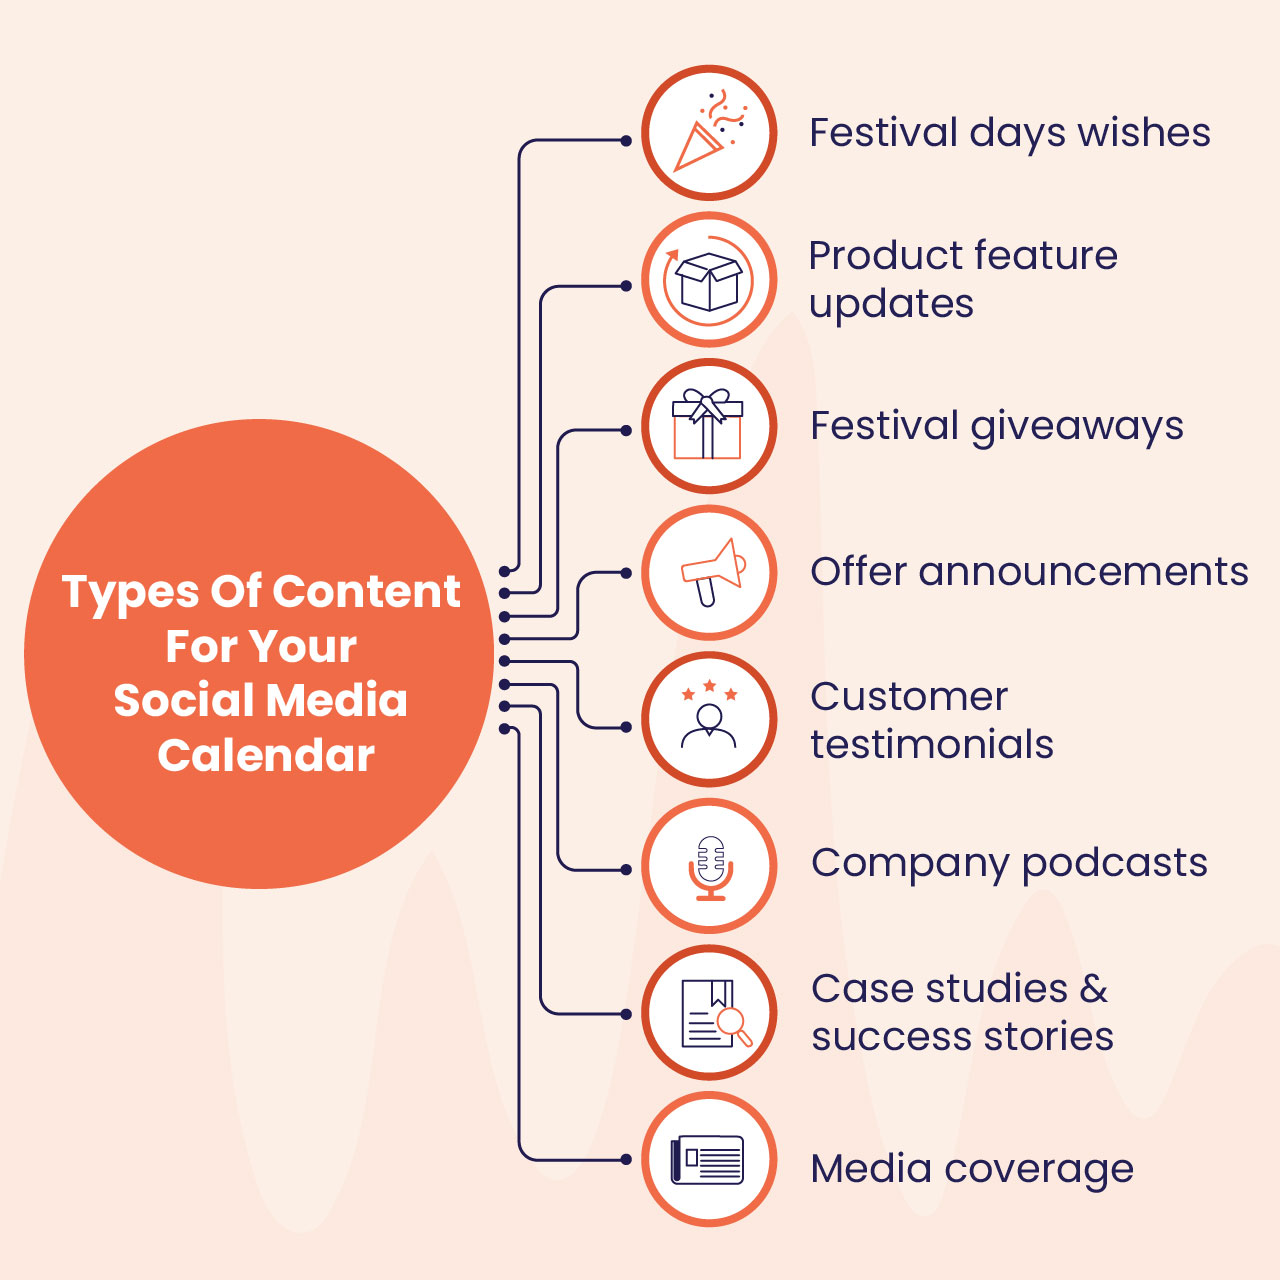 Social media content calendar infographic